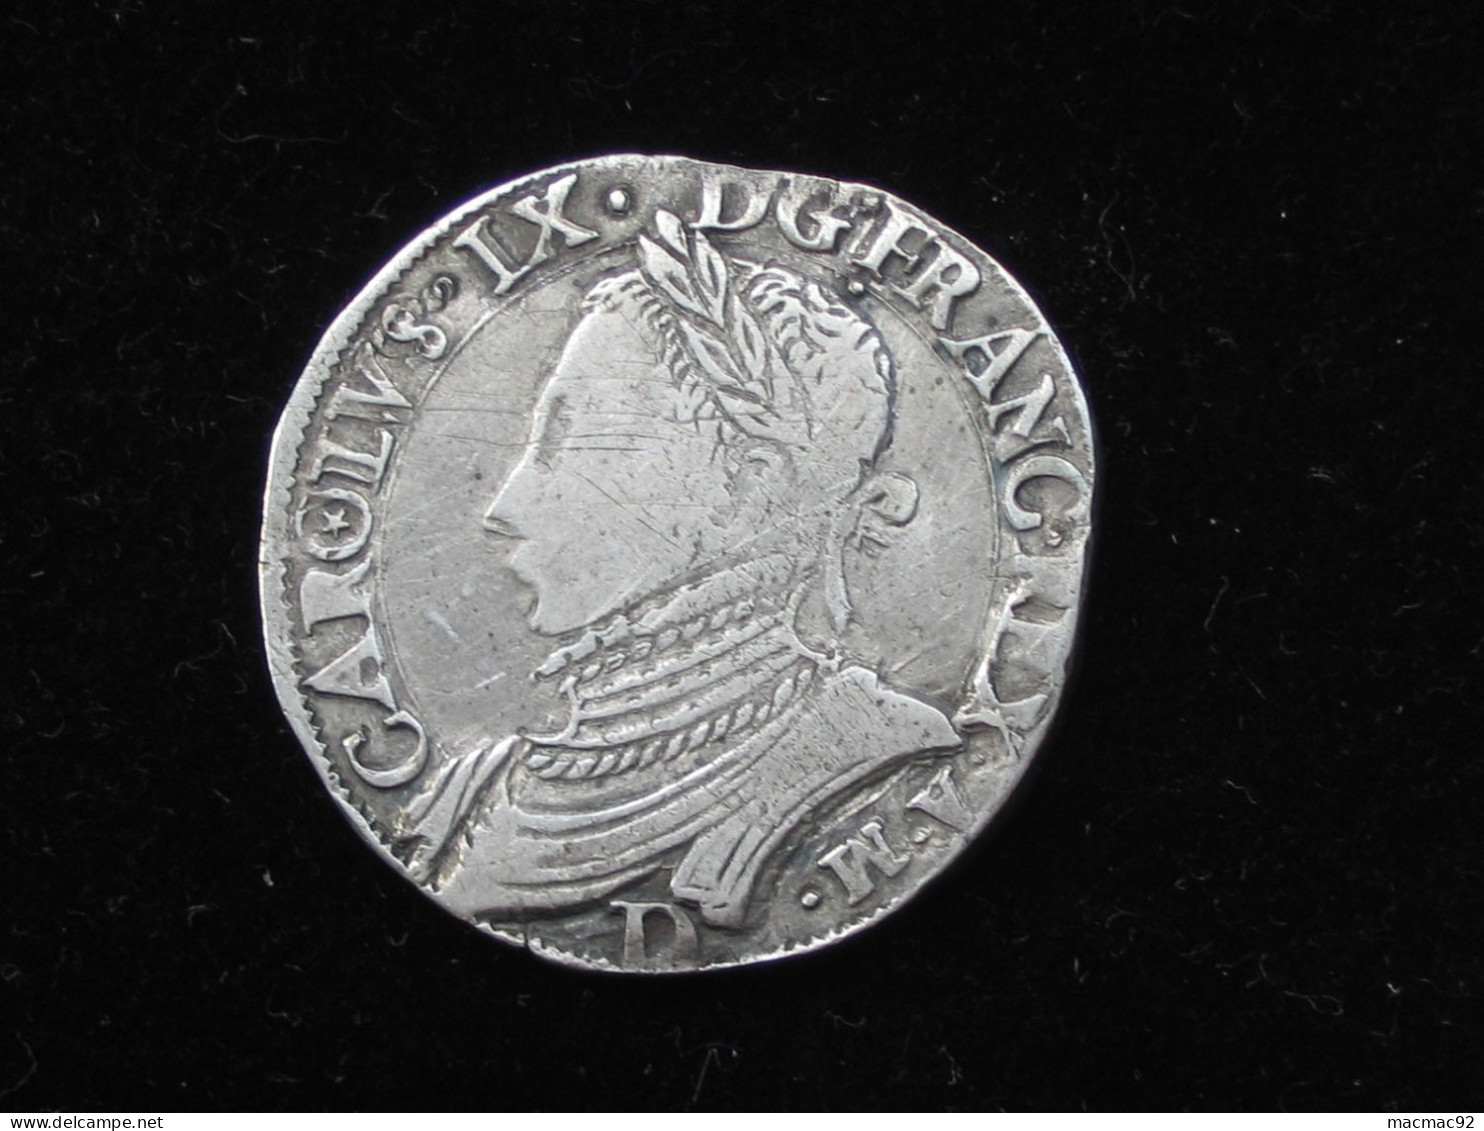 HENRI III. MONNAYAGE AU NOM DE CHARLES IX TESTON, 11e Type 1575 Lyon   **** EN ACHAT IMMEDIAT **** - 1574-1589 Heinrich III.